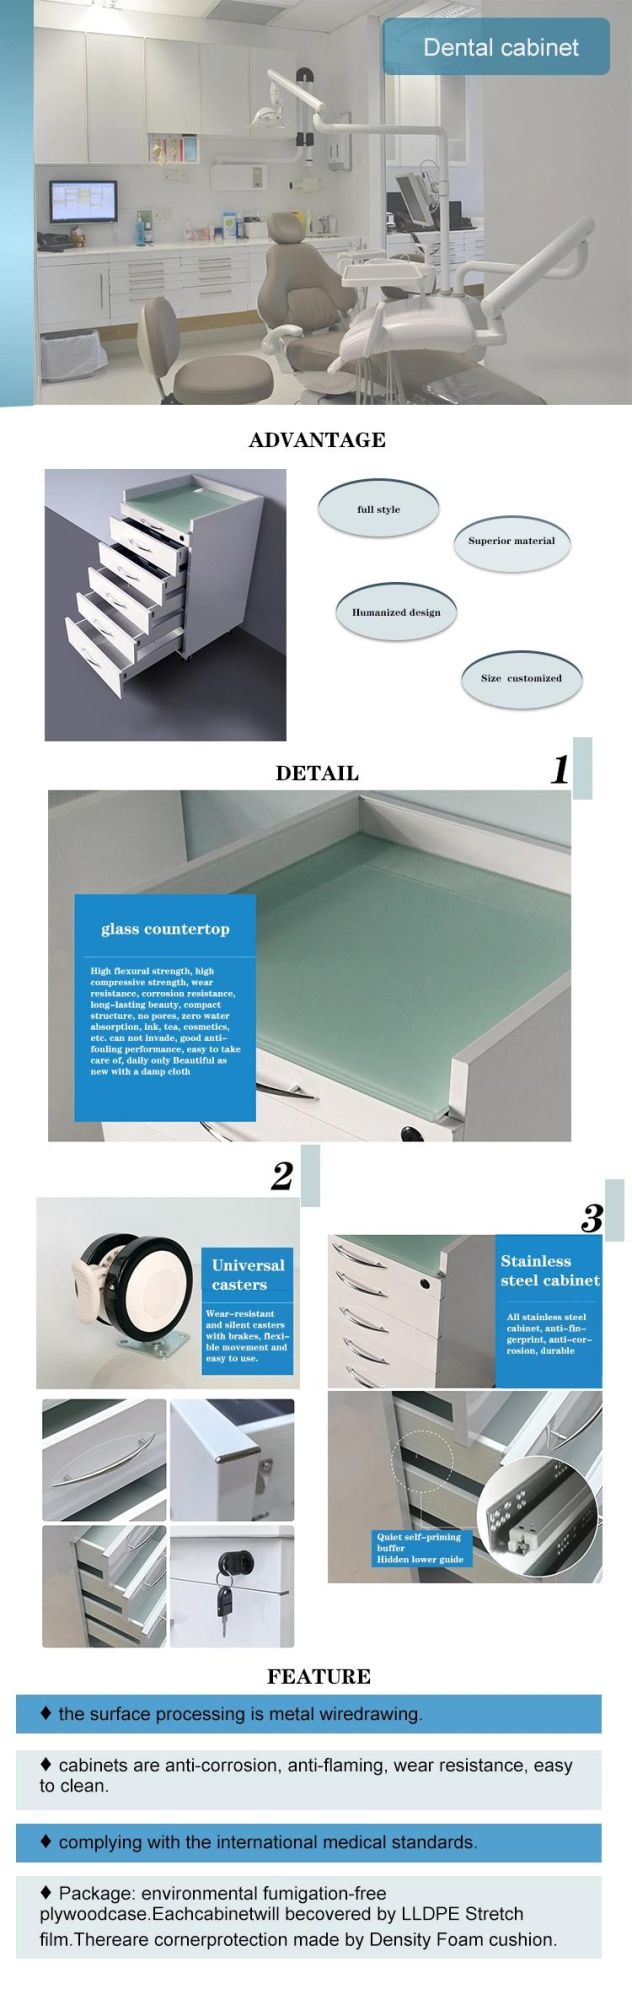 China Manufacturer Supply Dental Cabinet Furniture